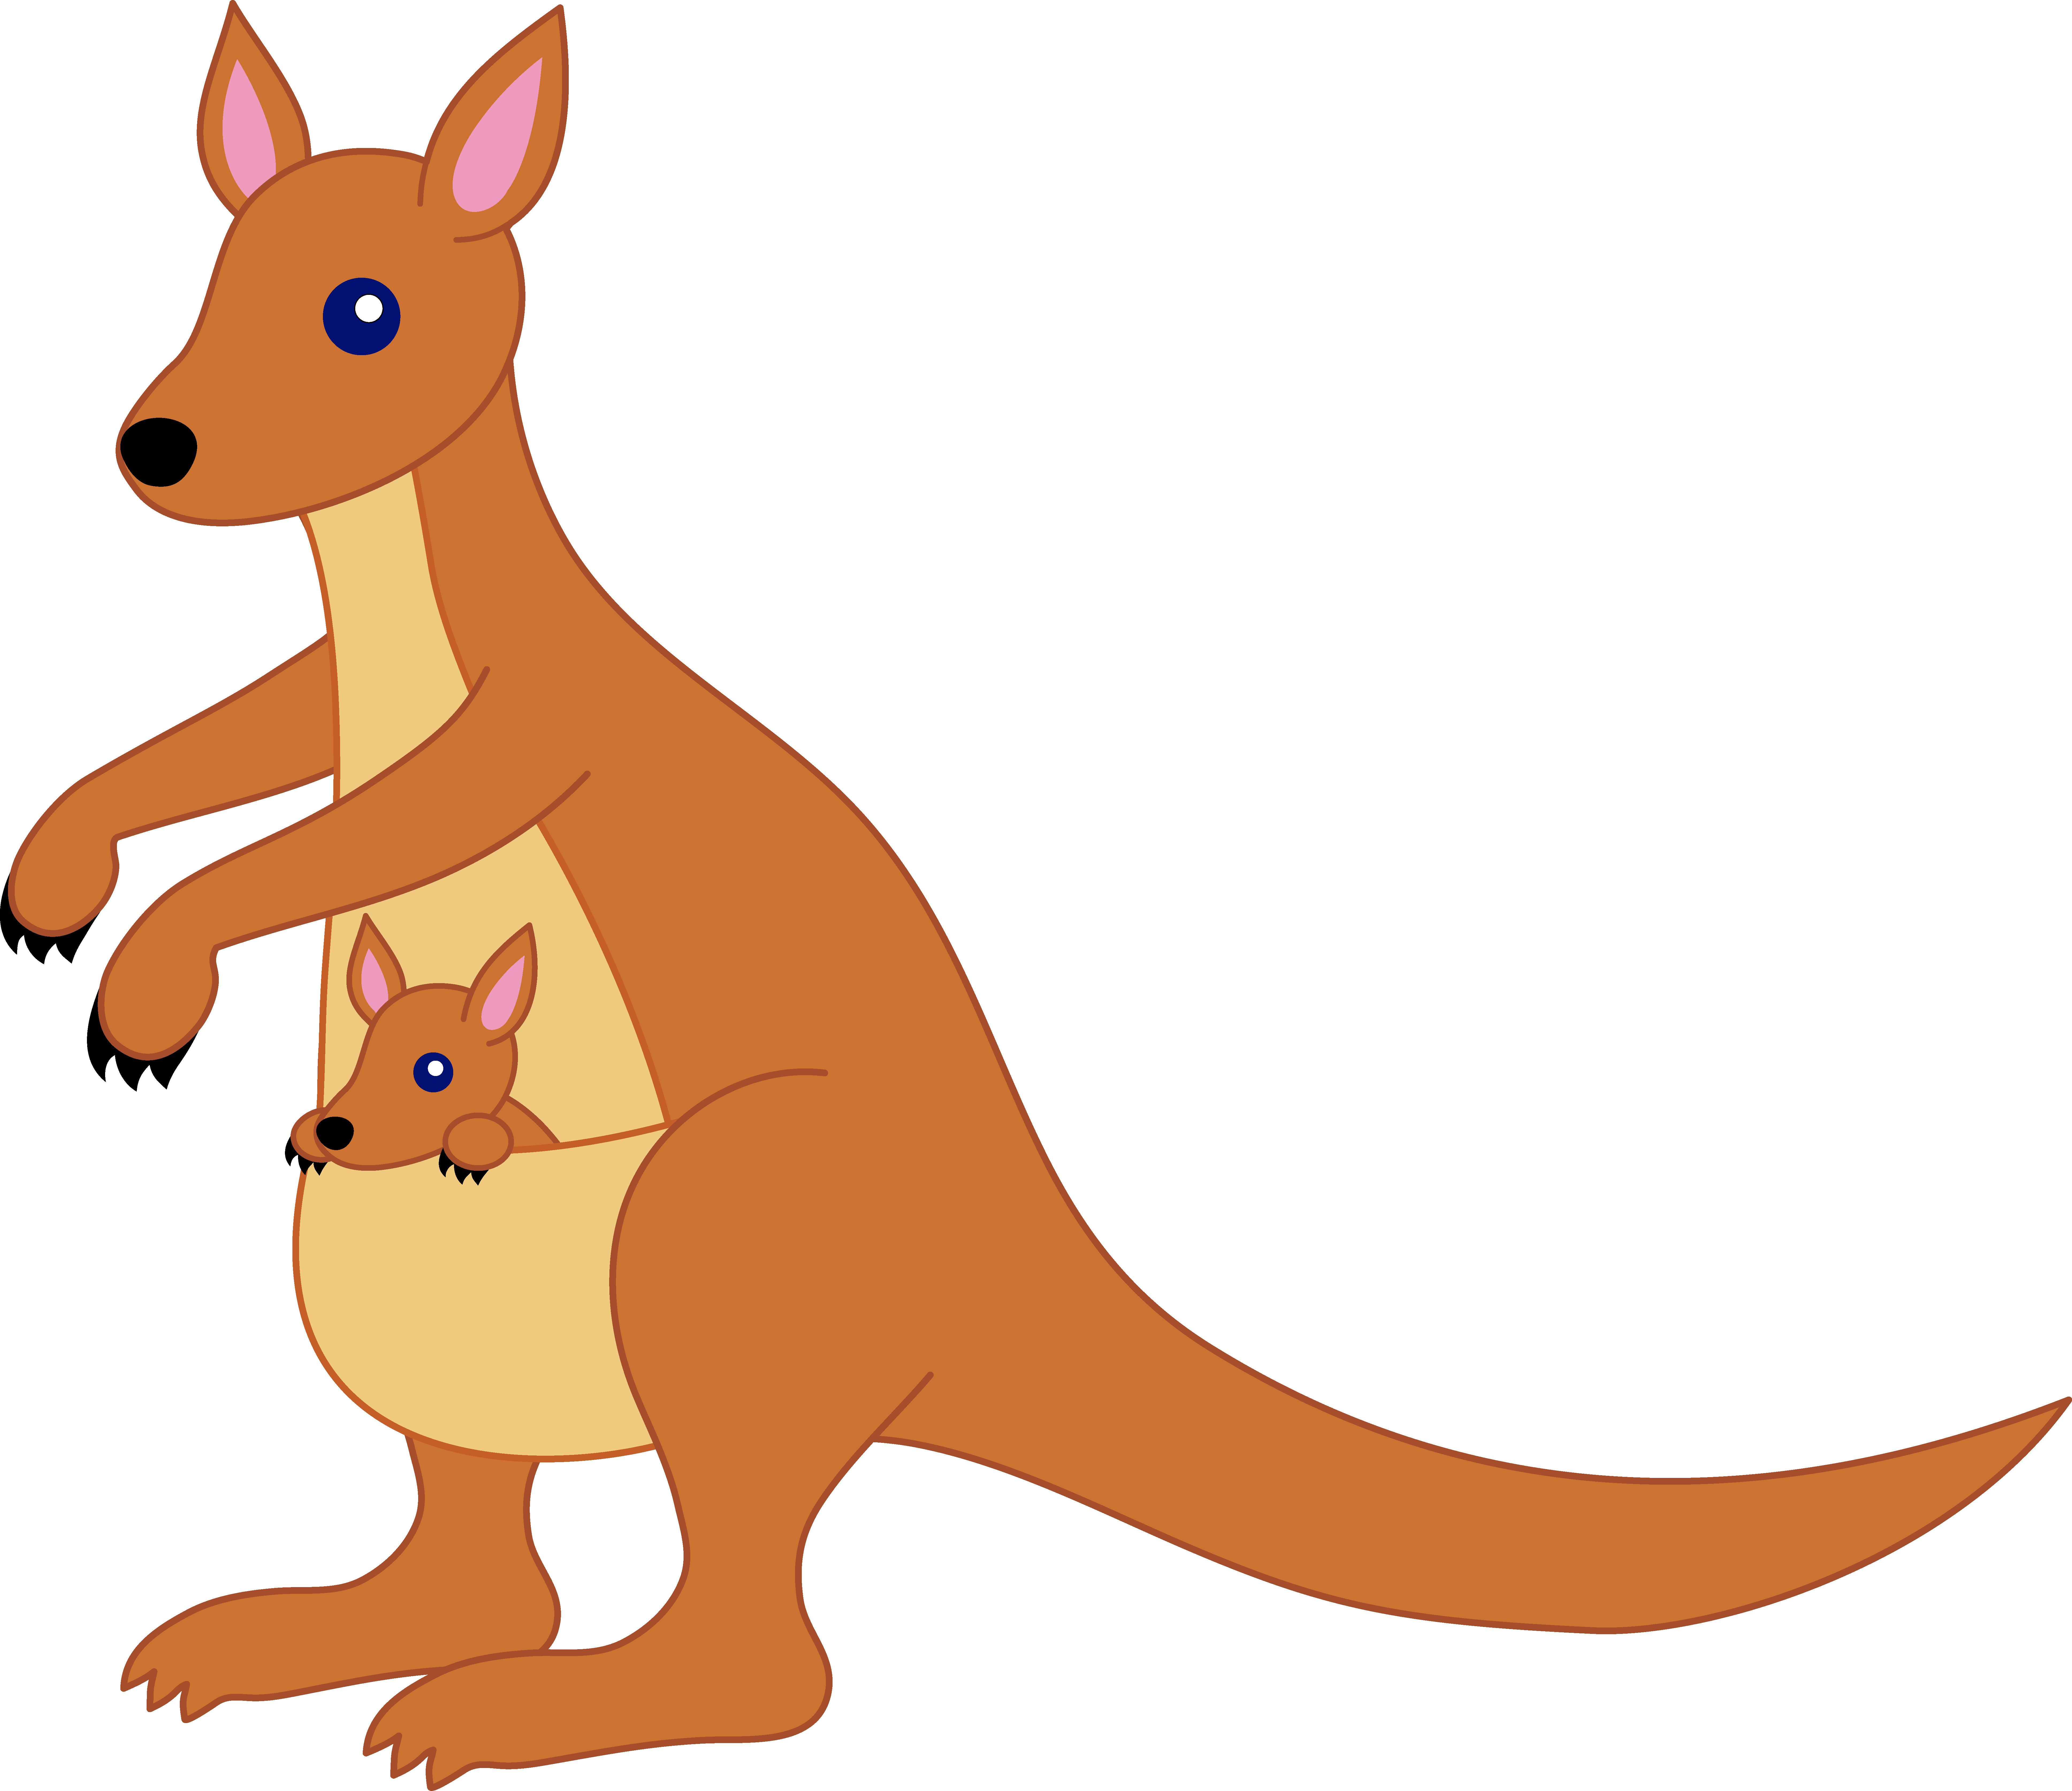 kangaroo clipart. Size: 87 Kb